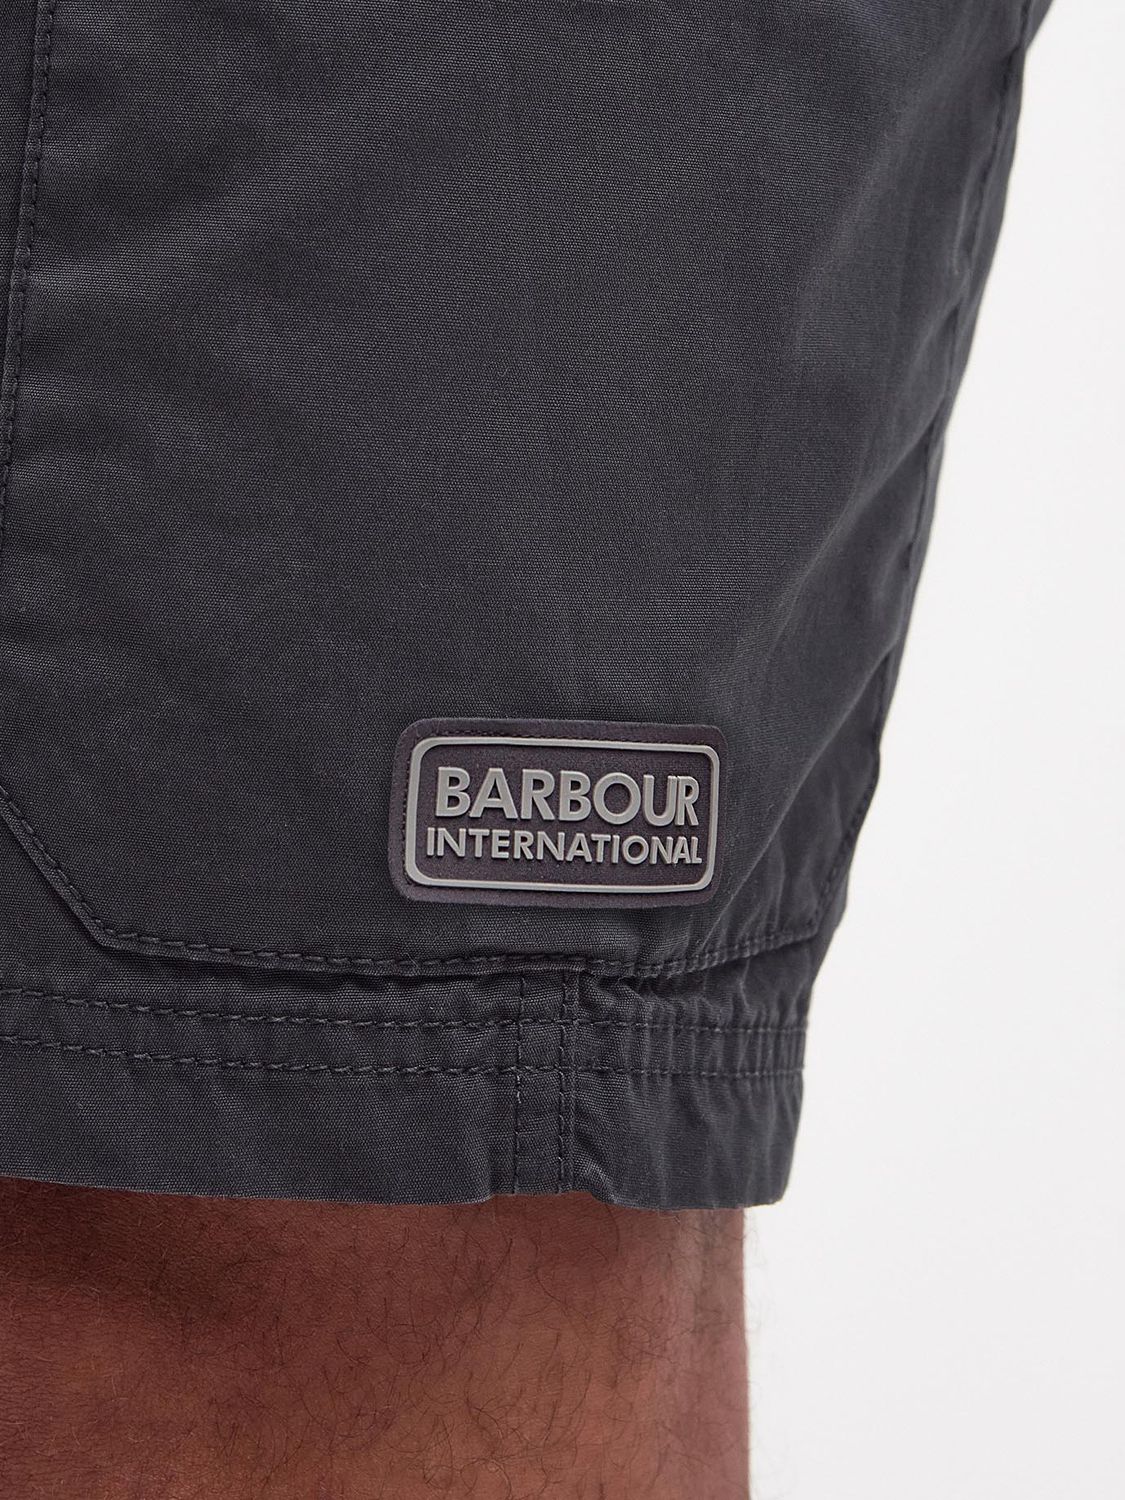 Buy Barbour International Gear Shorts Online at johnlewis.com